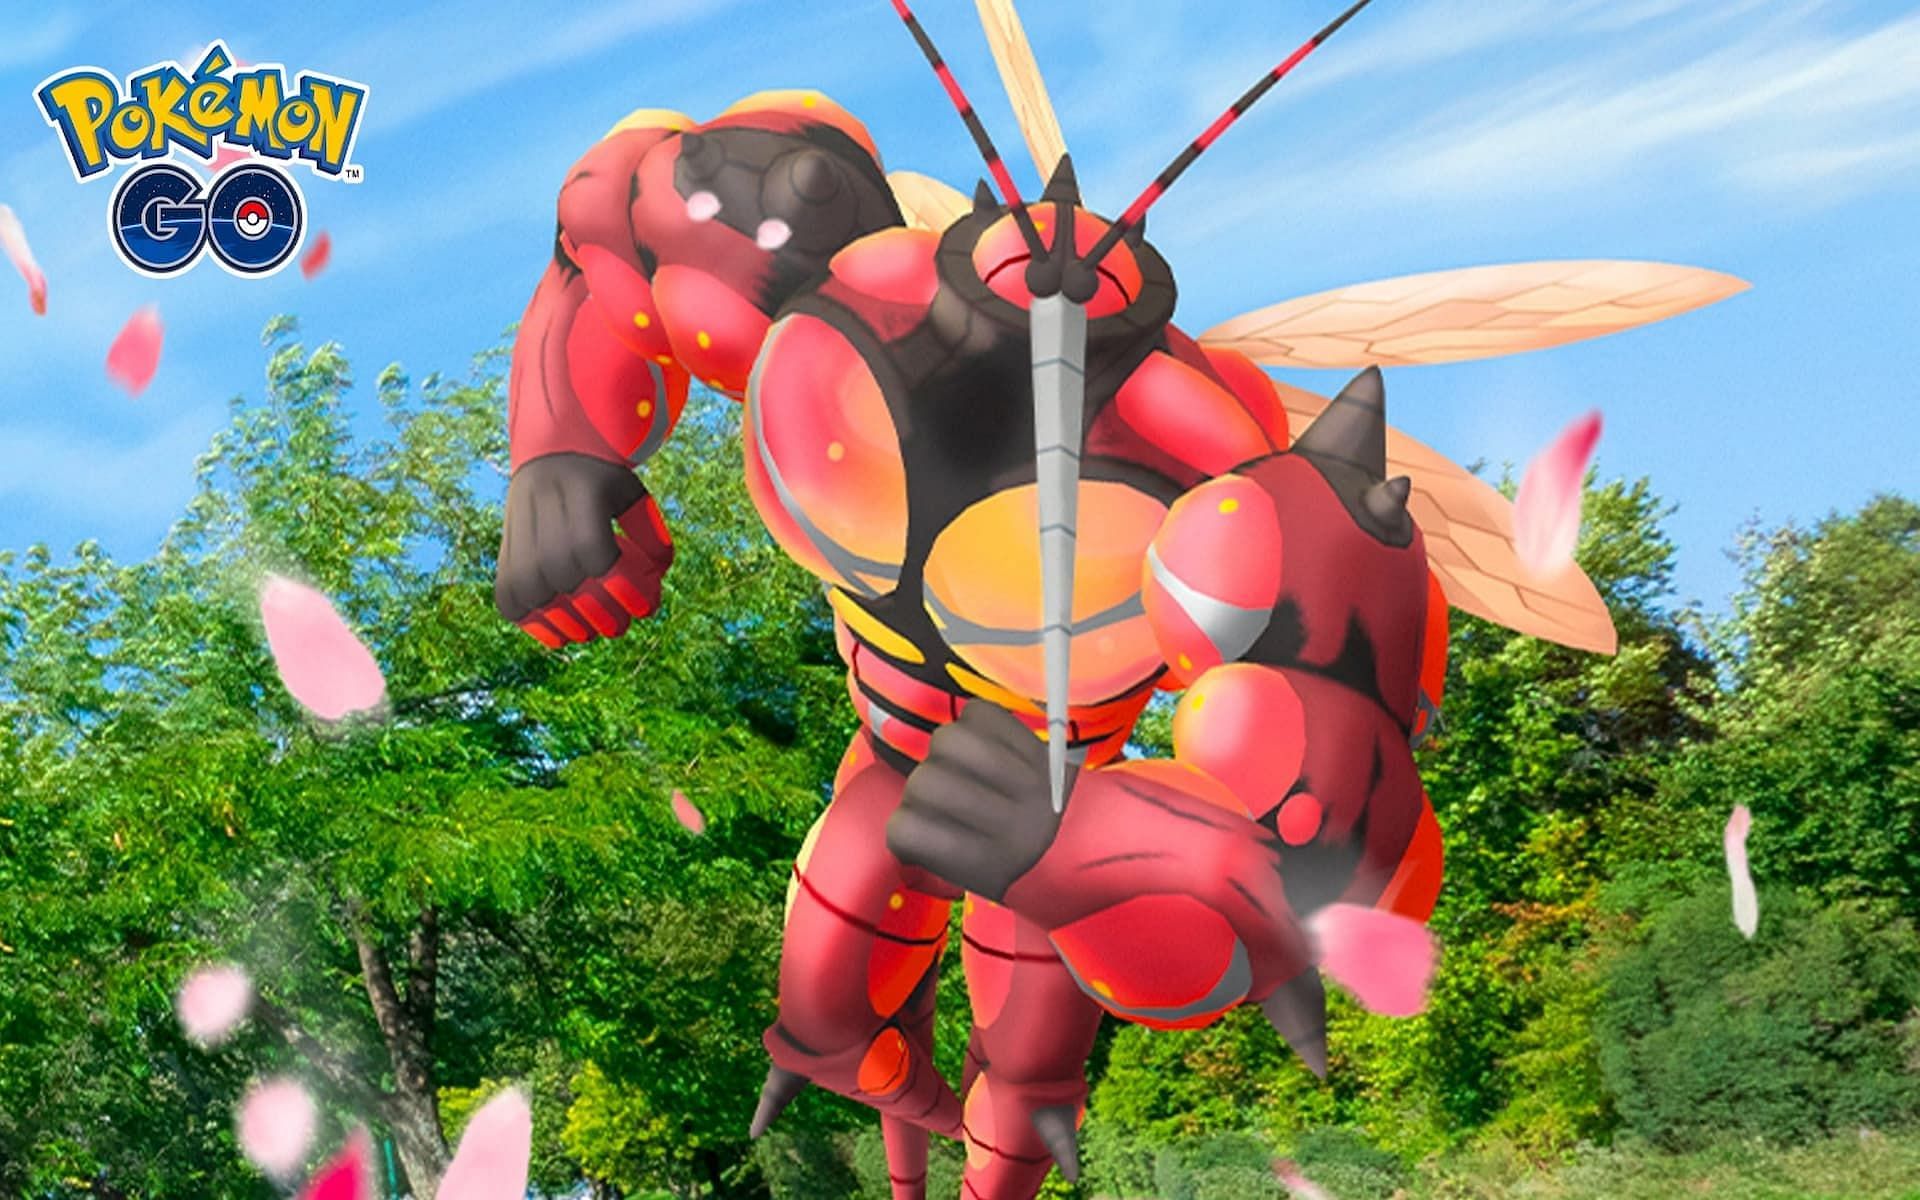 Buzzwole is a tough Ultra Beast to take down in Pokemon GO (Image via Niantic)